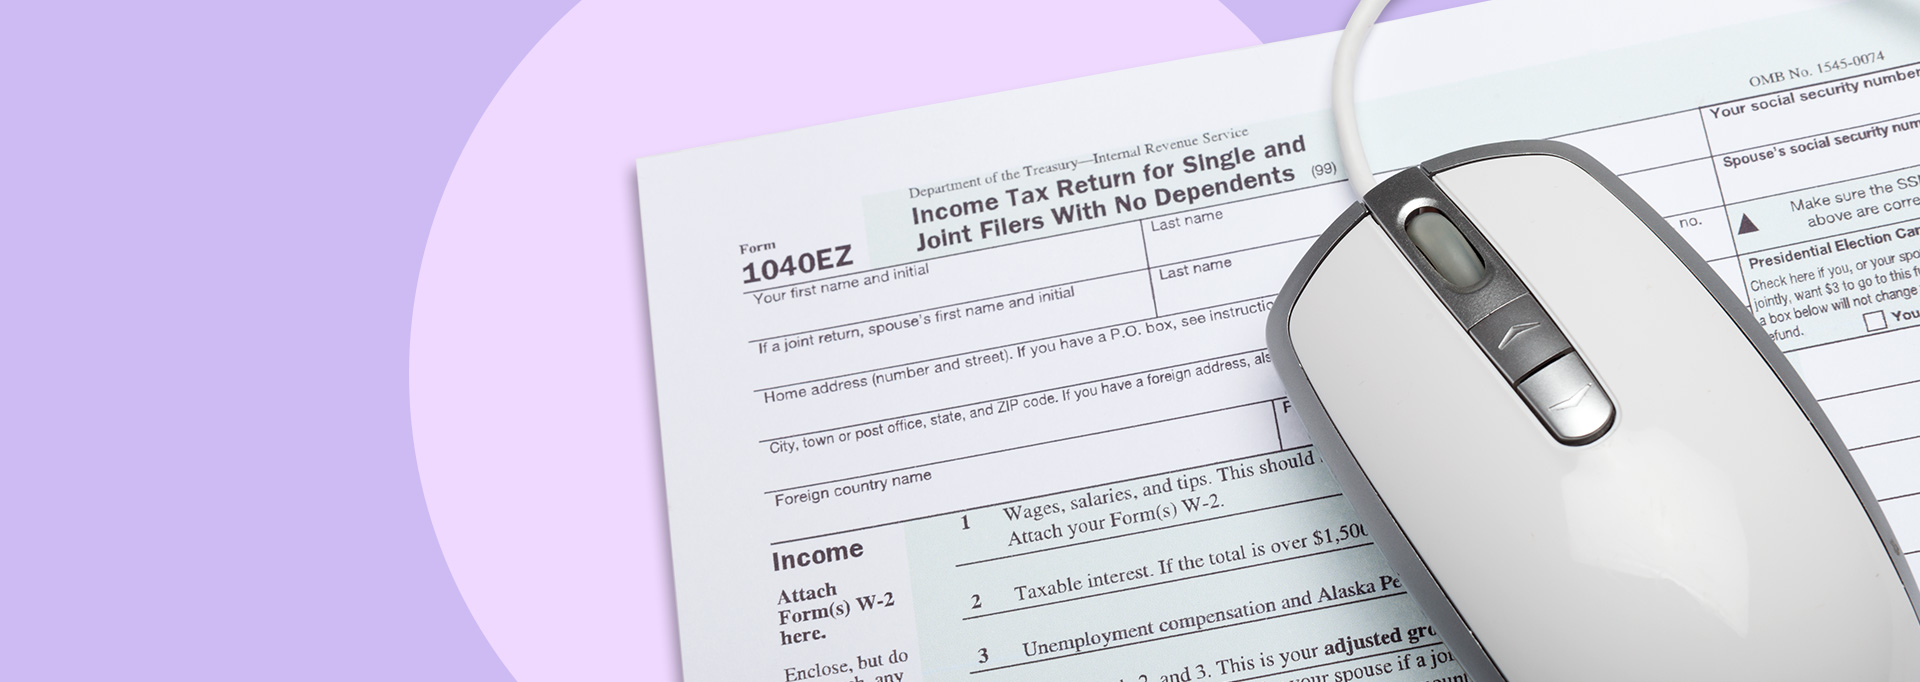 tax form on purple background